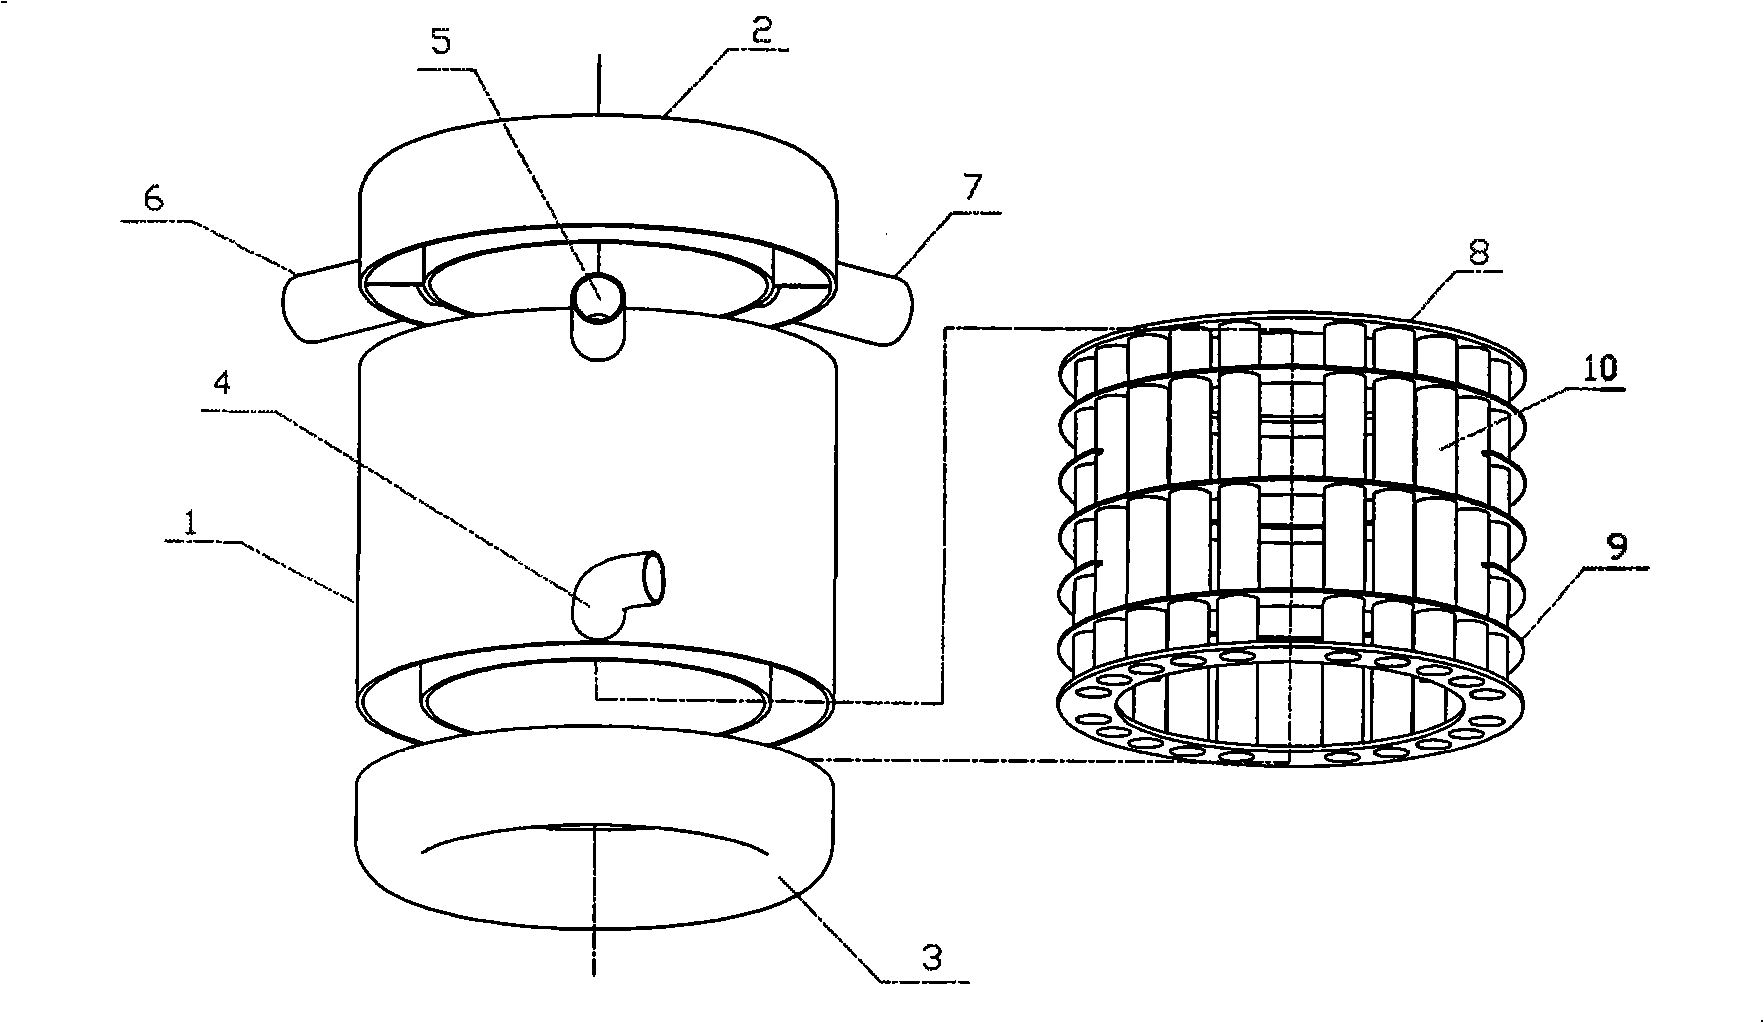 Ring shell and tube type heat exchanger possessing commutation function